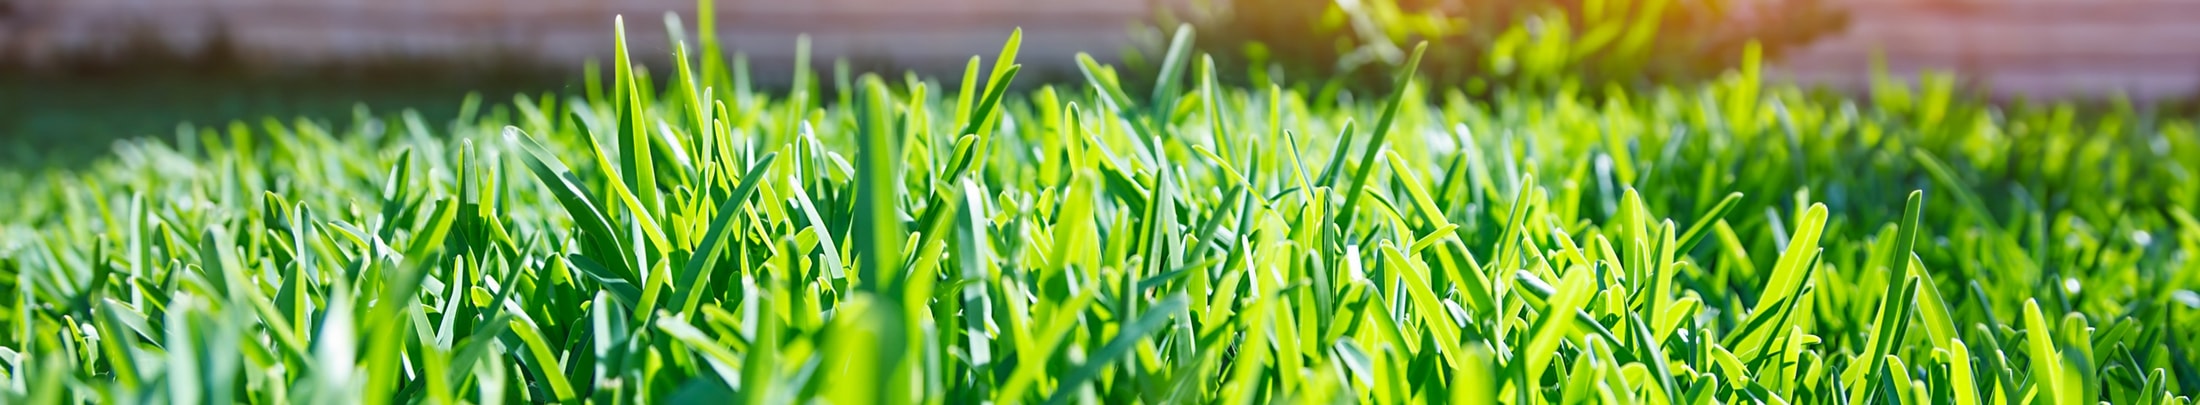 close up green healthy grass